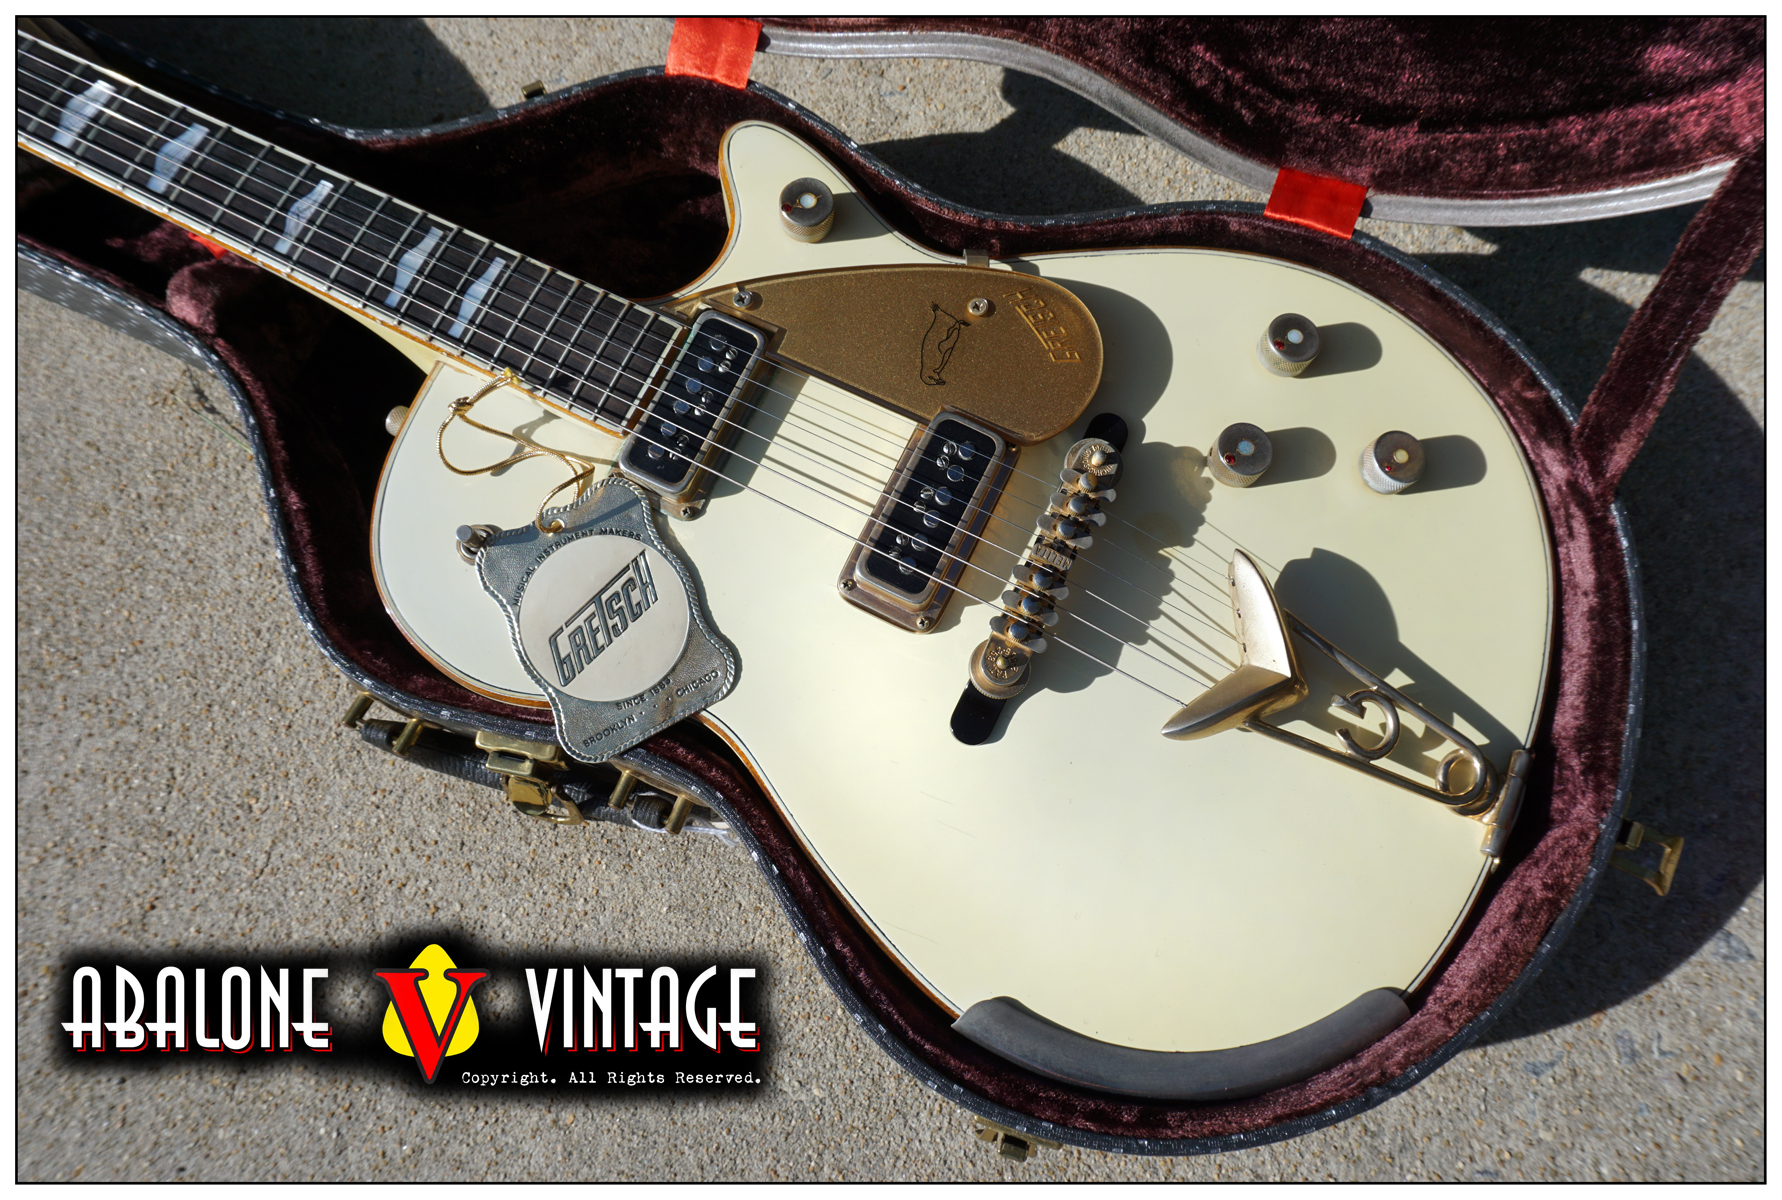 1956 Gretsch White Penguin guitar Original vintage mr clean